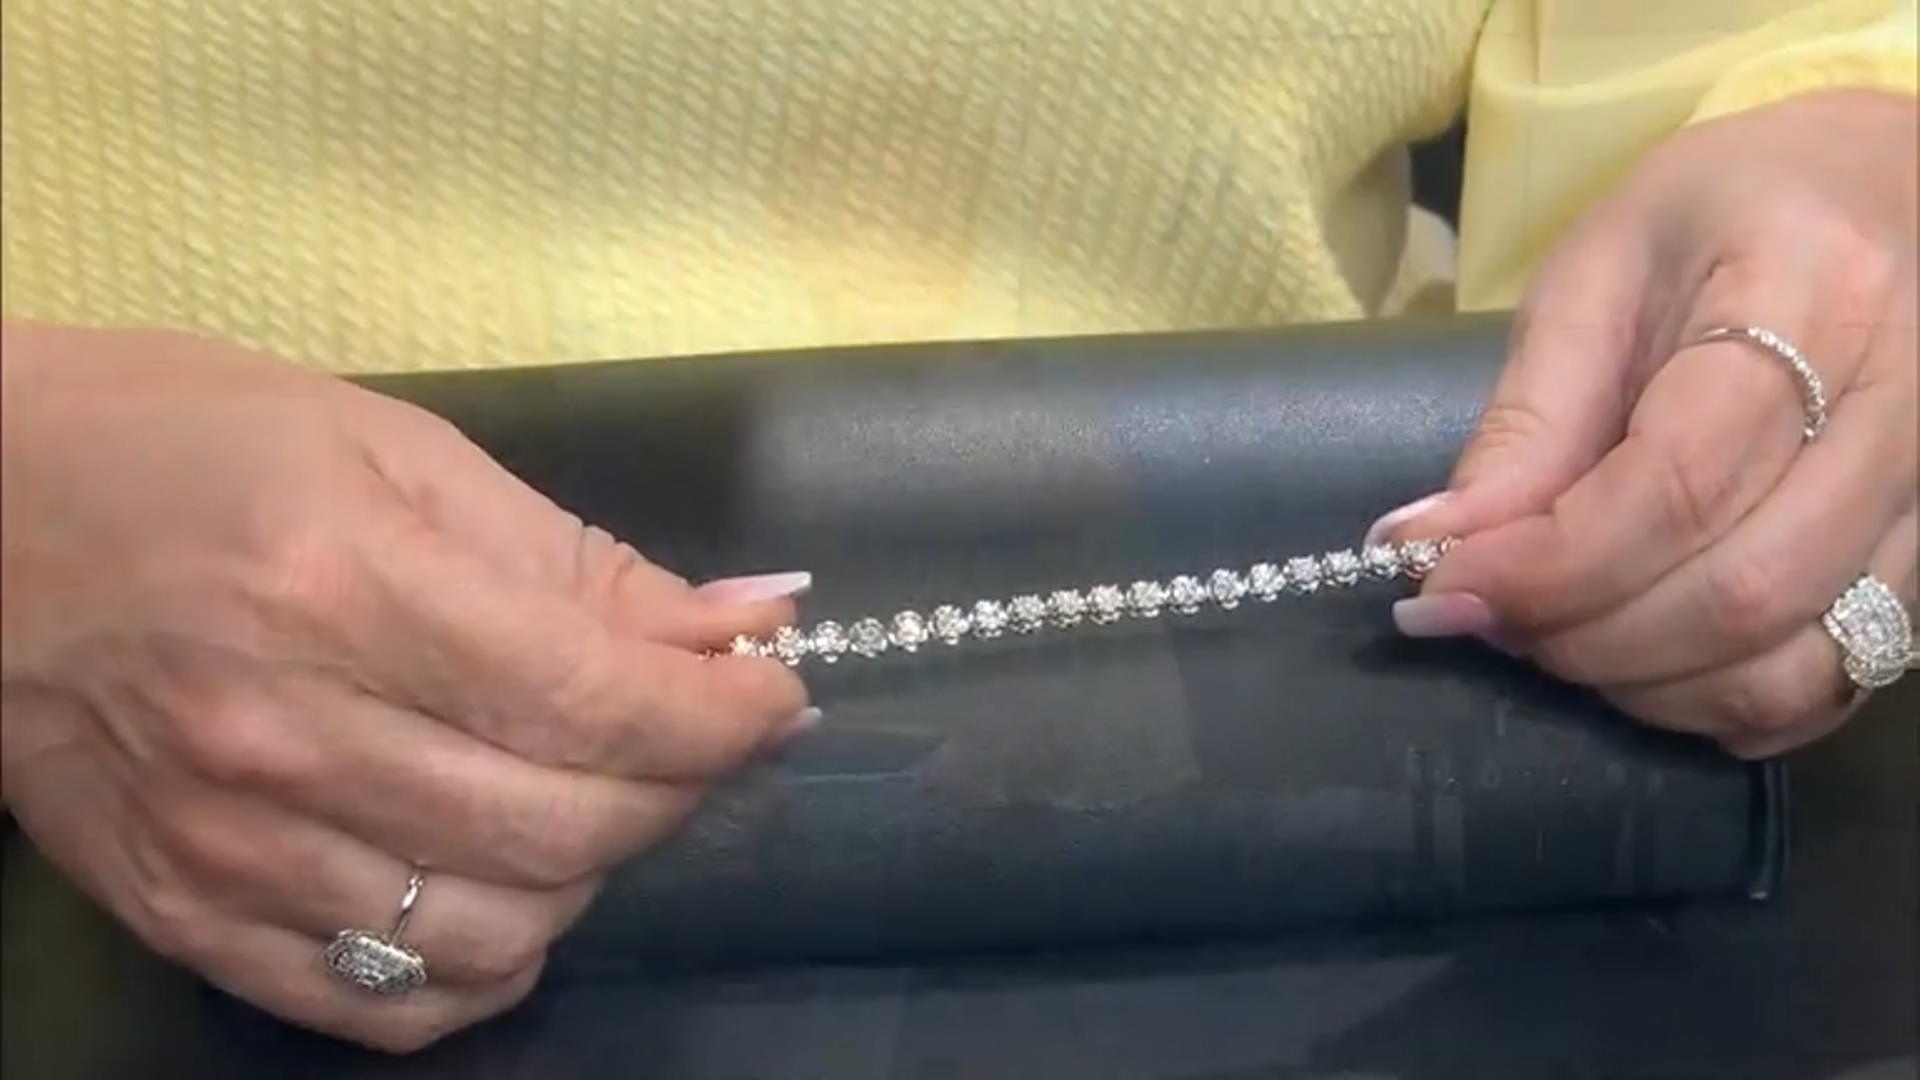 White Lab-Grown Diamond Rhodium Over Sterling Silver Tennis Bracelet 1.00ctw Video Thumbnail